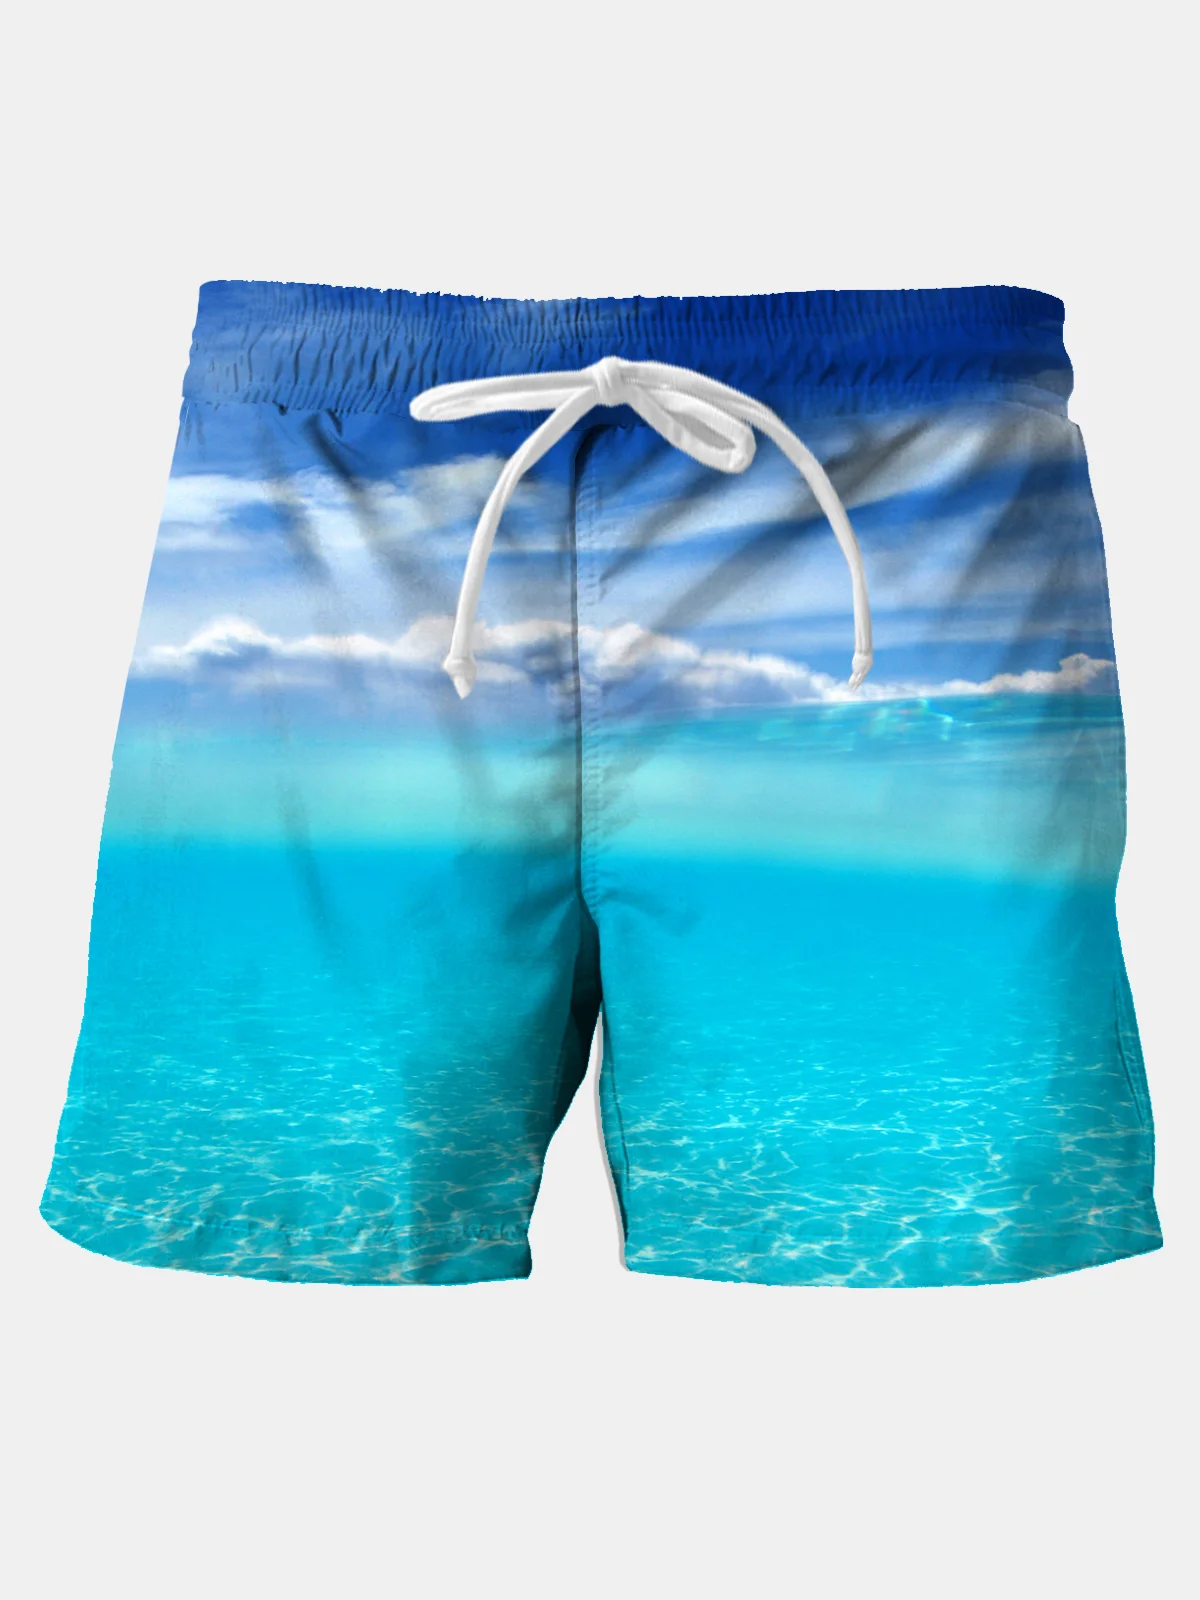 Royaura Men's Ocean Waves Holiday Board Shorts Art Stretch Basic Shorts Swim Trunks